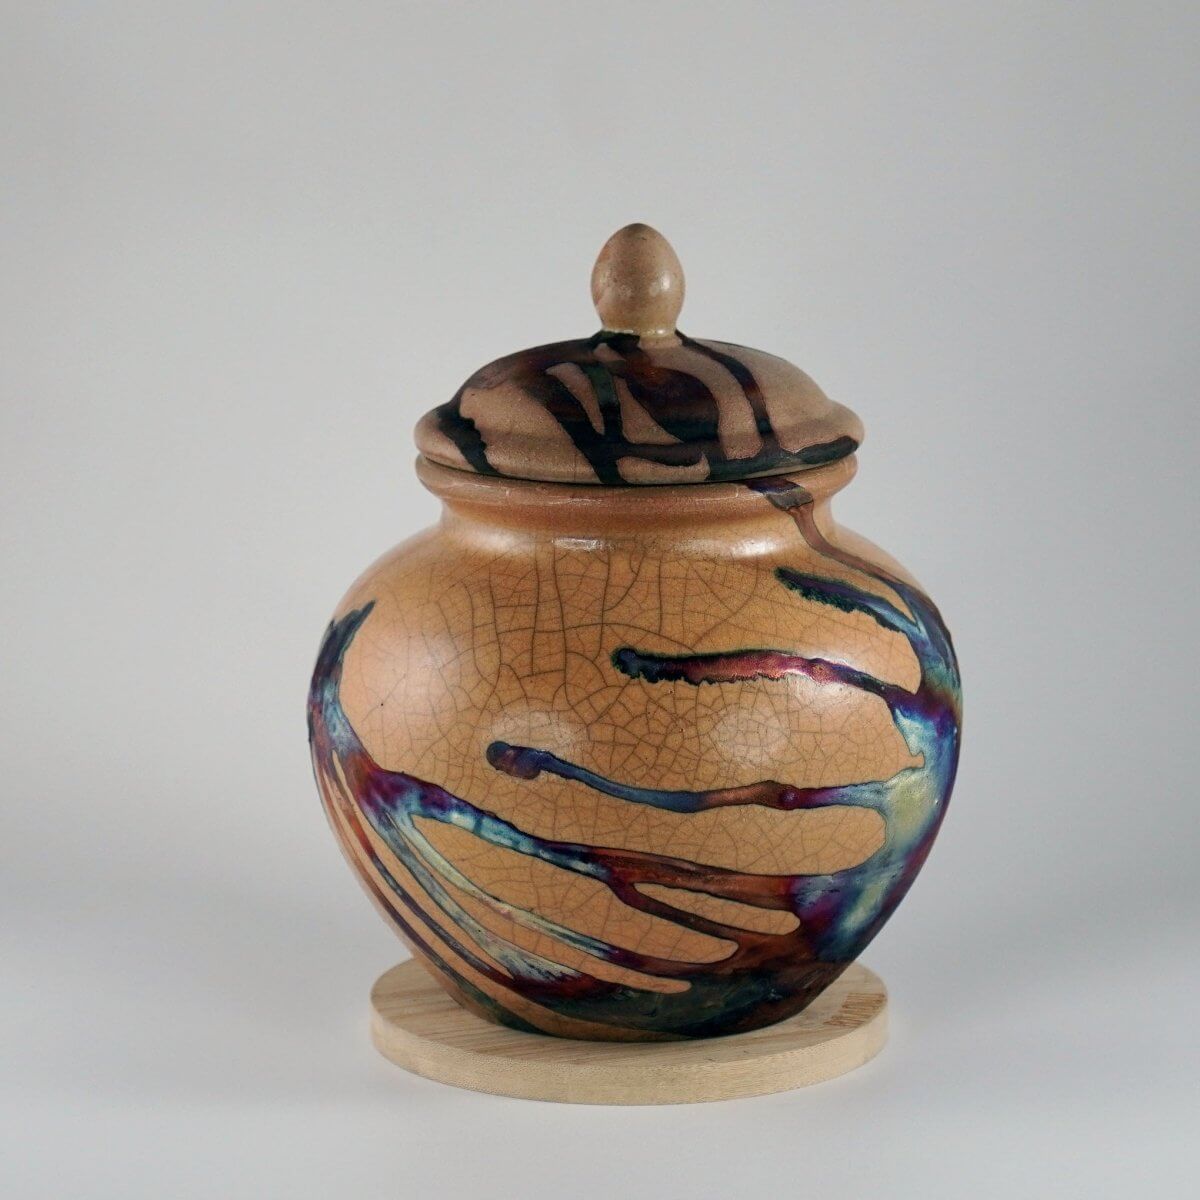 RAAQUU Tamashii Ceramic Half Copper Matte Pet Urn for Remains/Ashes S/N80000080 - Raku Pottery 85 cubic inches Unique Handmade Cremation Vessel - RAAQUU